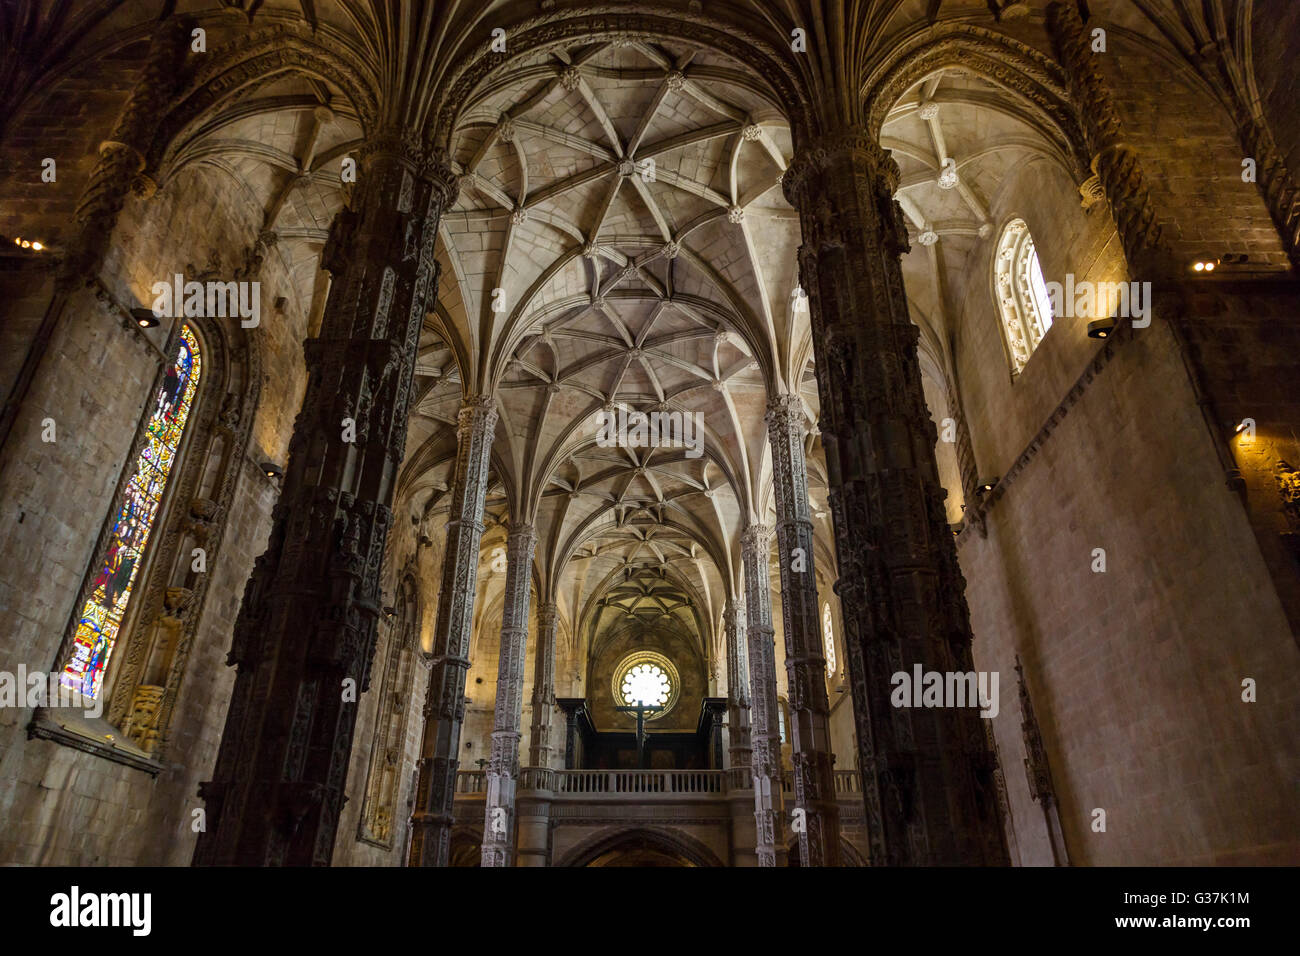 Interieur-Details des Klosters oder Hieronymuskloster in Lissabon, Portugal. Stockfoto